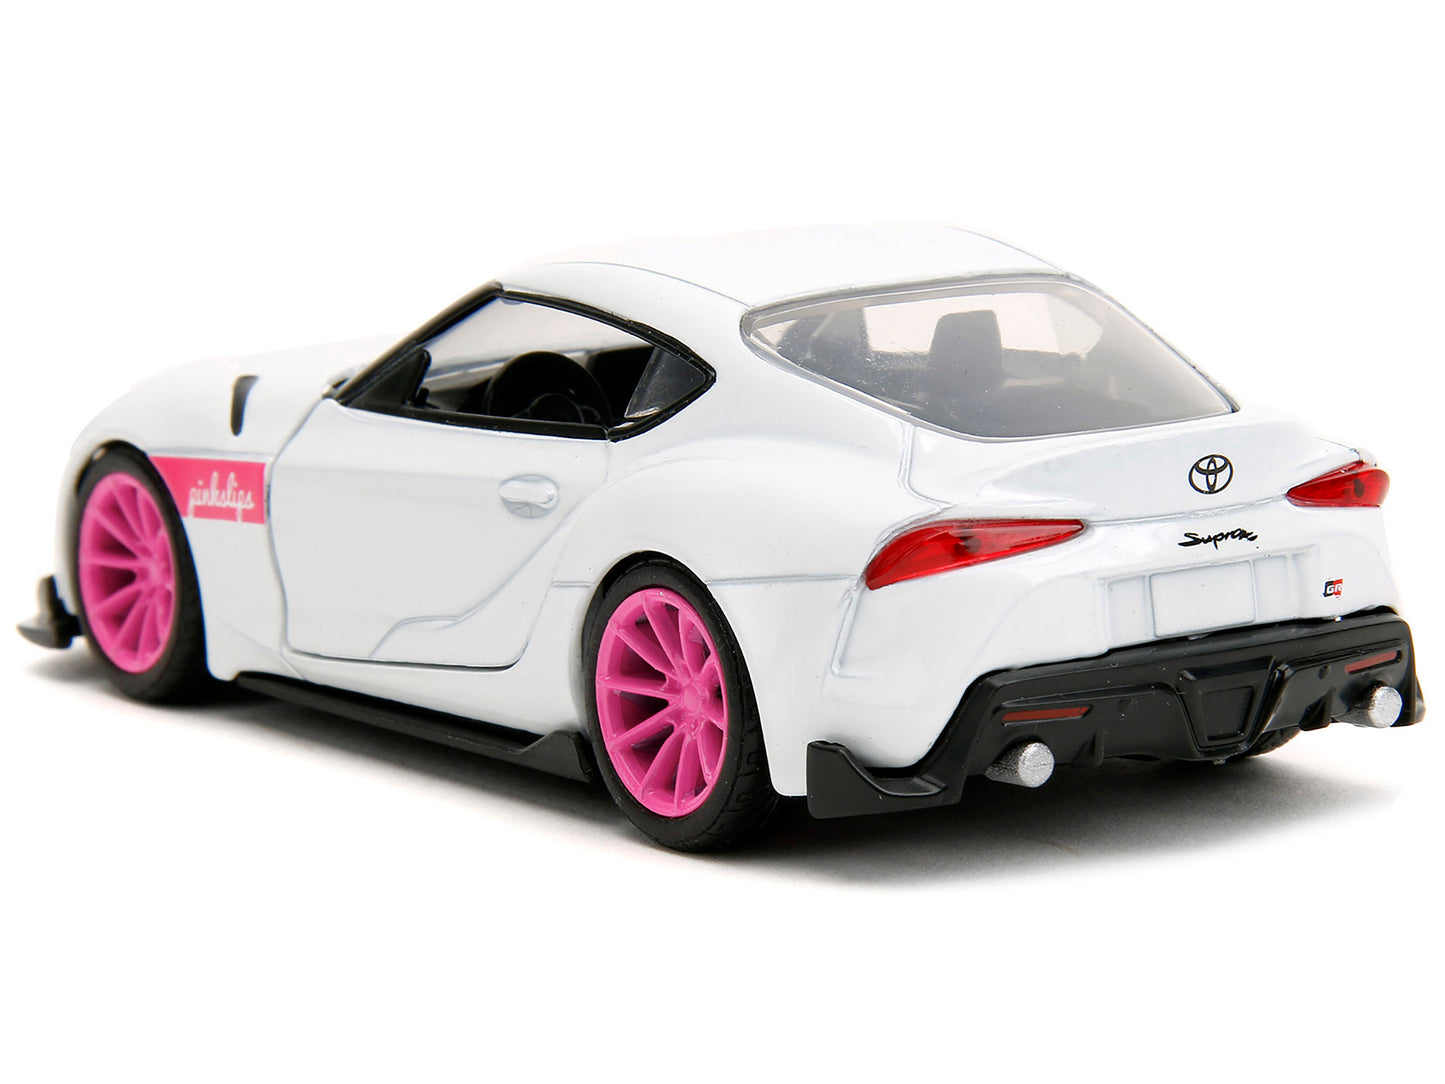 2020 Toyota Supra White Metallic with Pink Wheels "Pink Slips" Series 1/32 Diecast Model Car by Jada